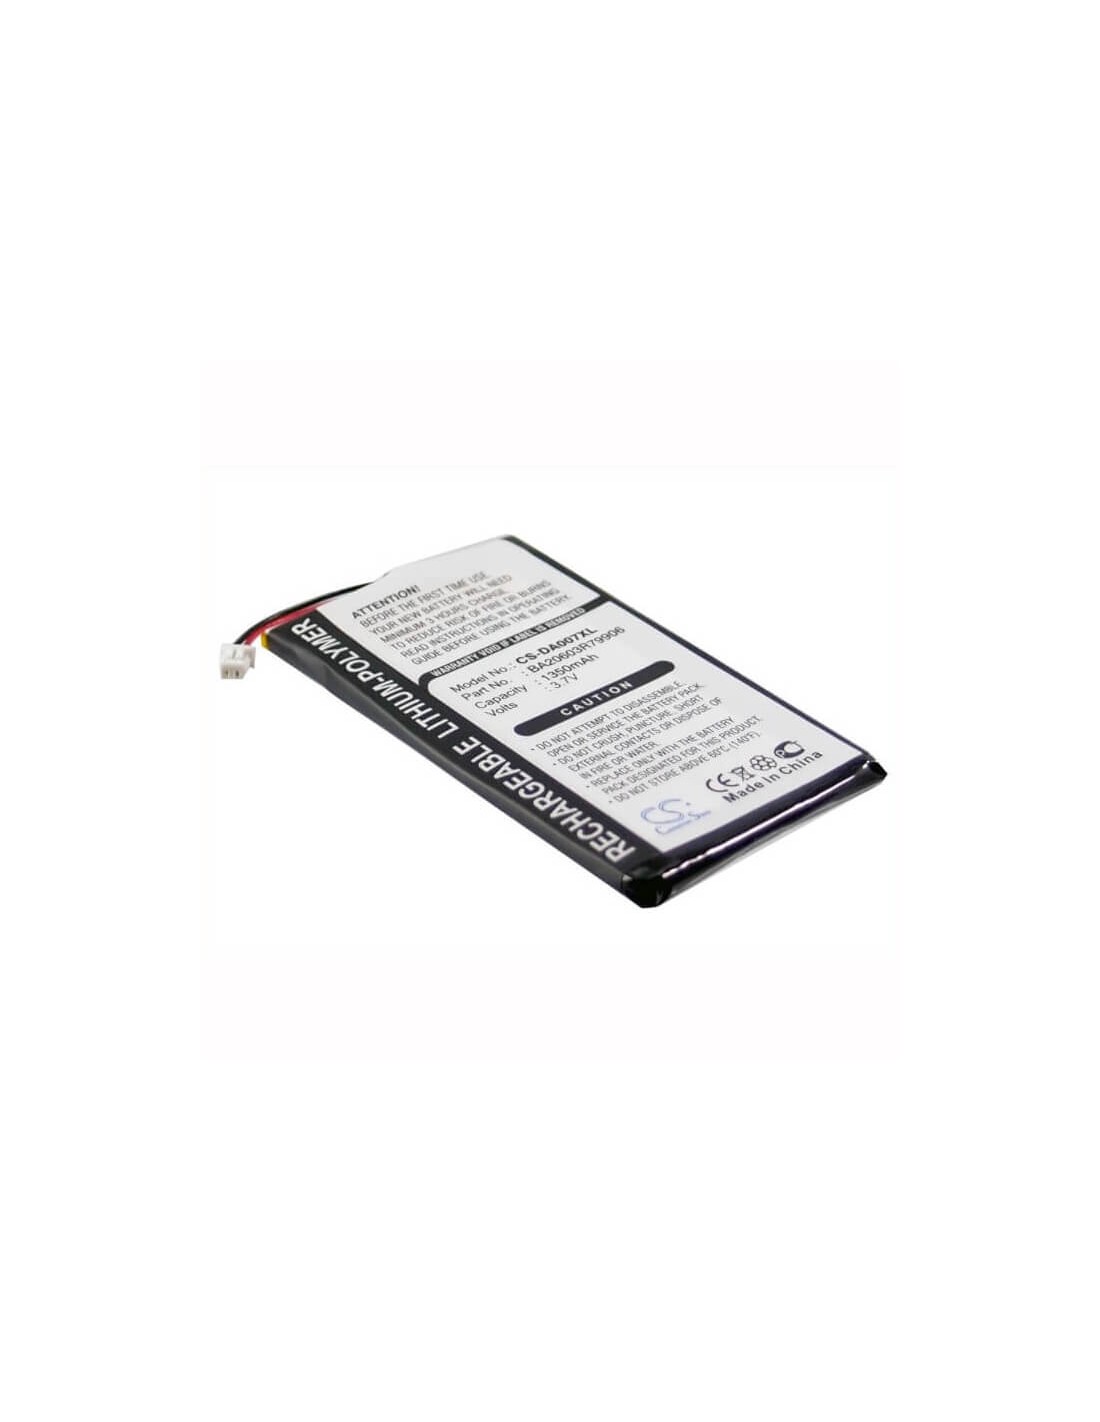 Battery for Creative Zen Neeon, Zen Neeon 2, Zen Neeon Dap-md0005 3.7V, 1350mAh - 5.00Wh